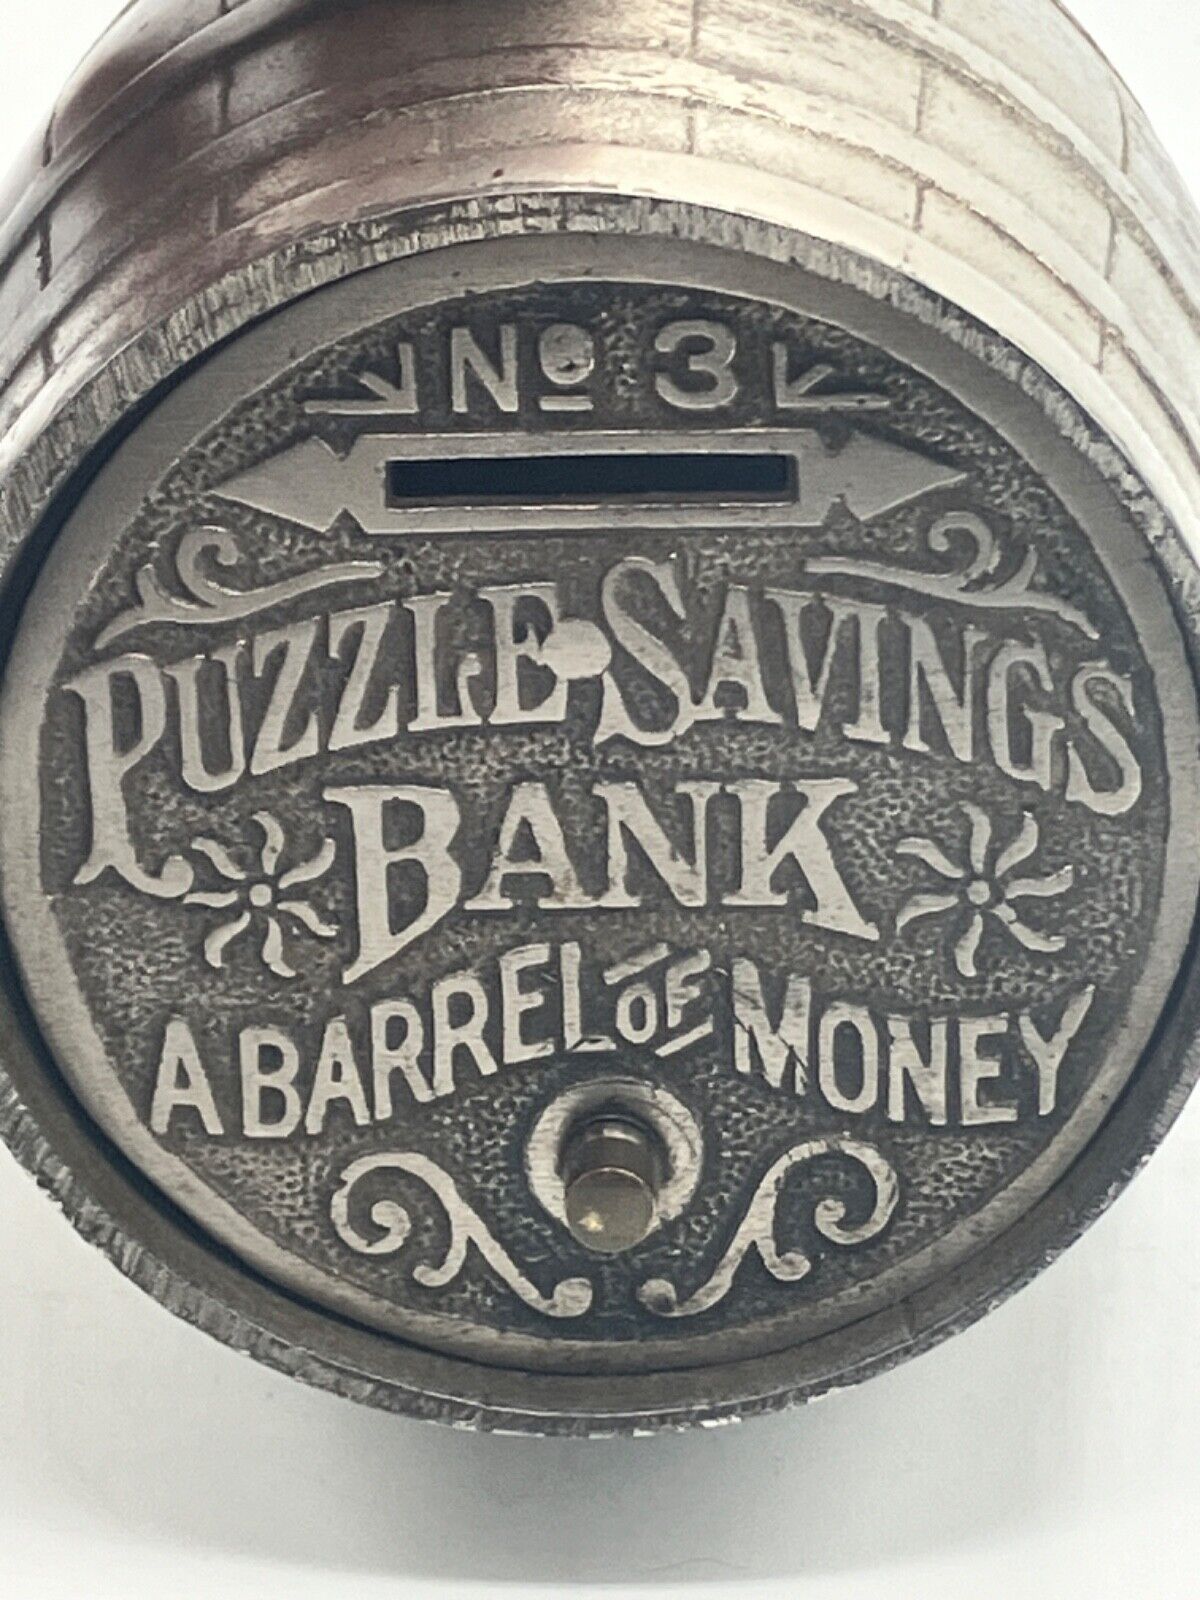 Rare Puzzle Savings Bank No 3 A Barrel Of Money. c. 1893. 